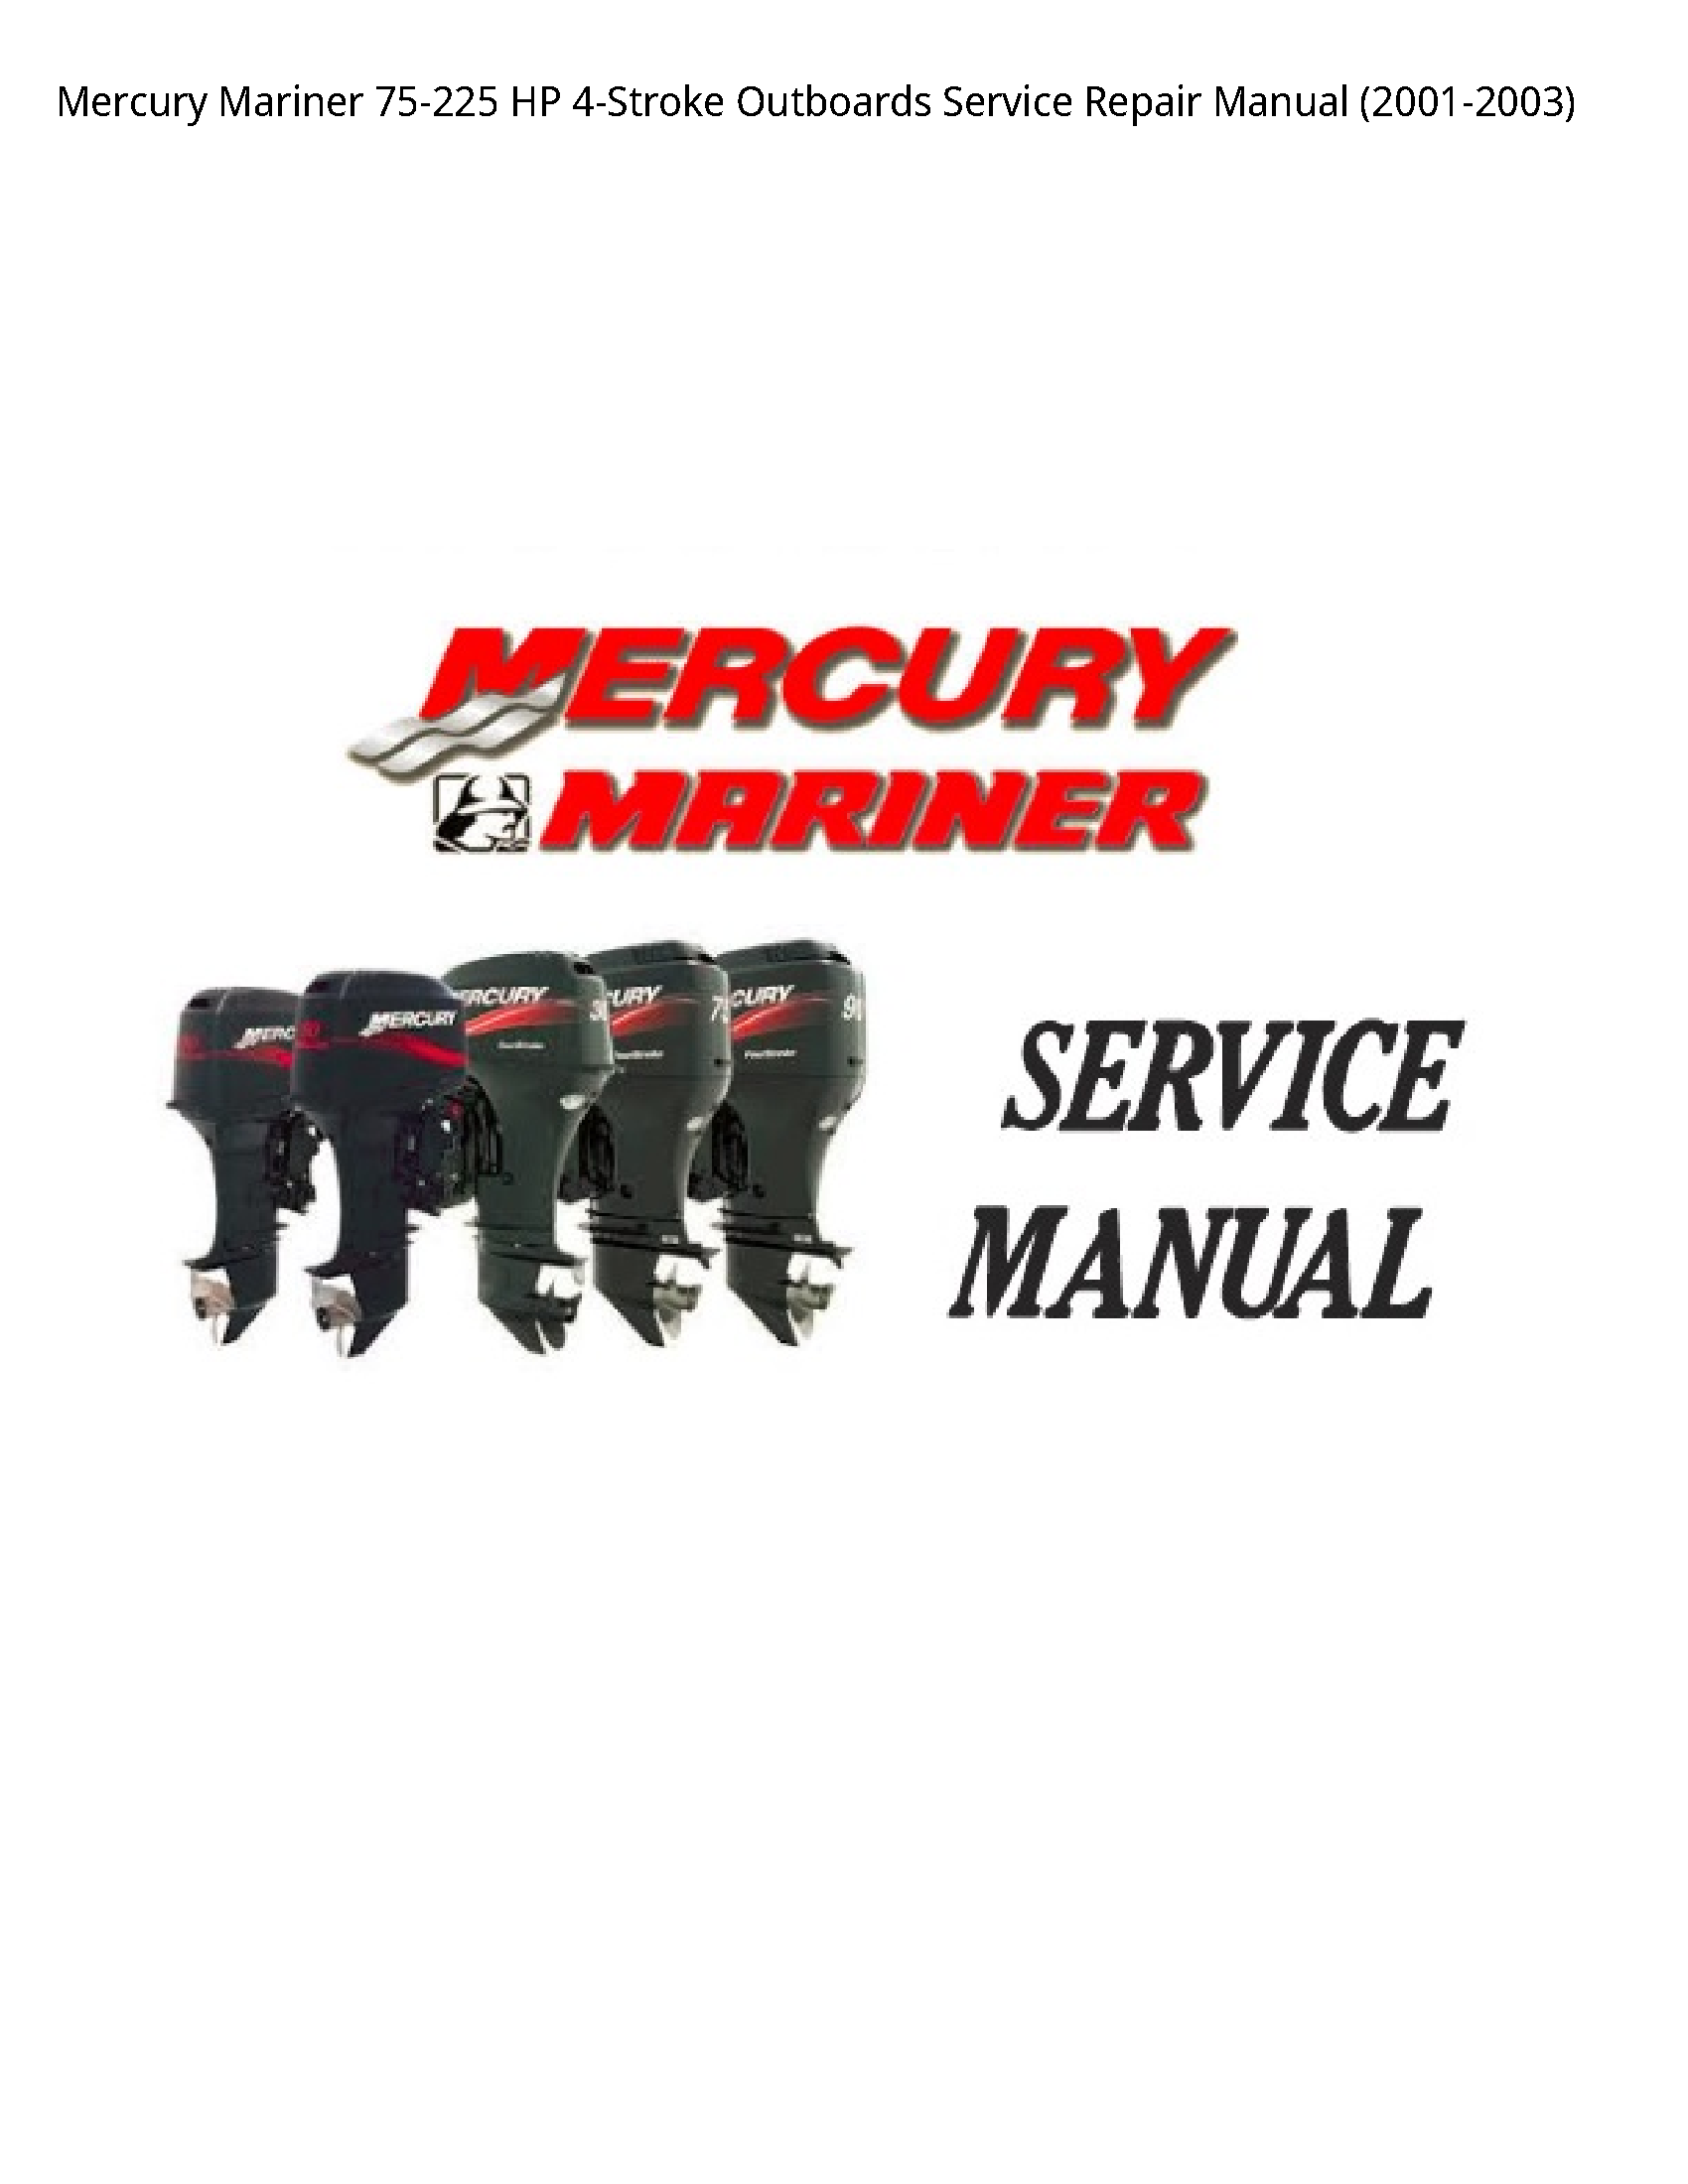 Mercury Mariner 75-225 HP Outboards manual